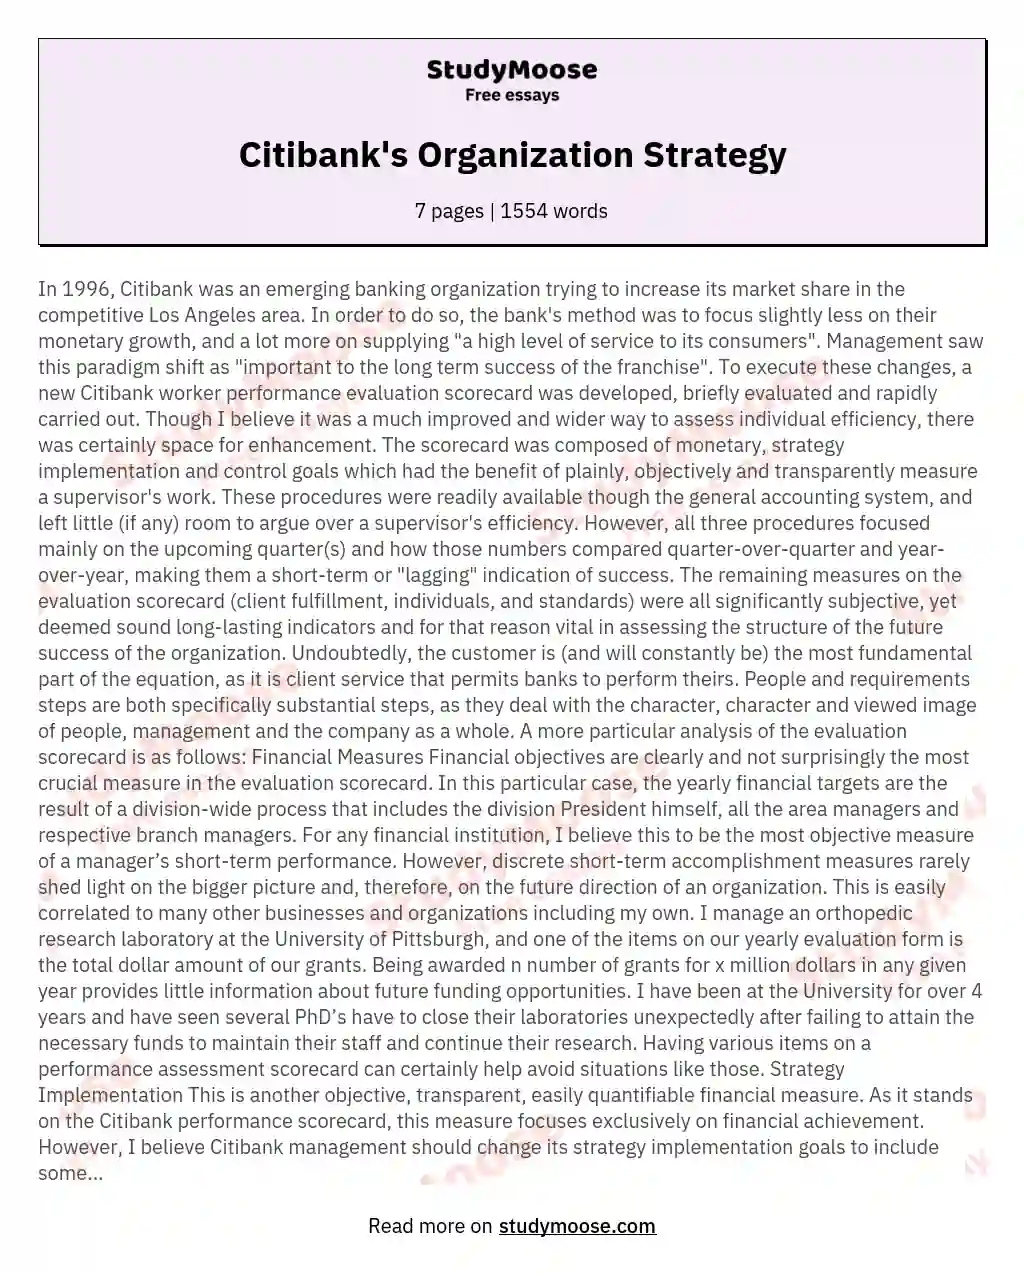 Citibank's Organization Strategy essay